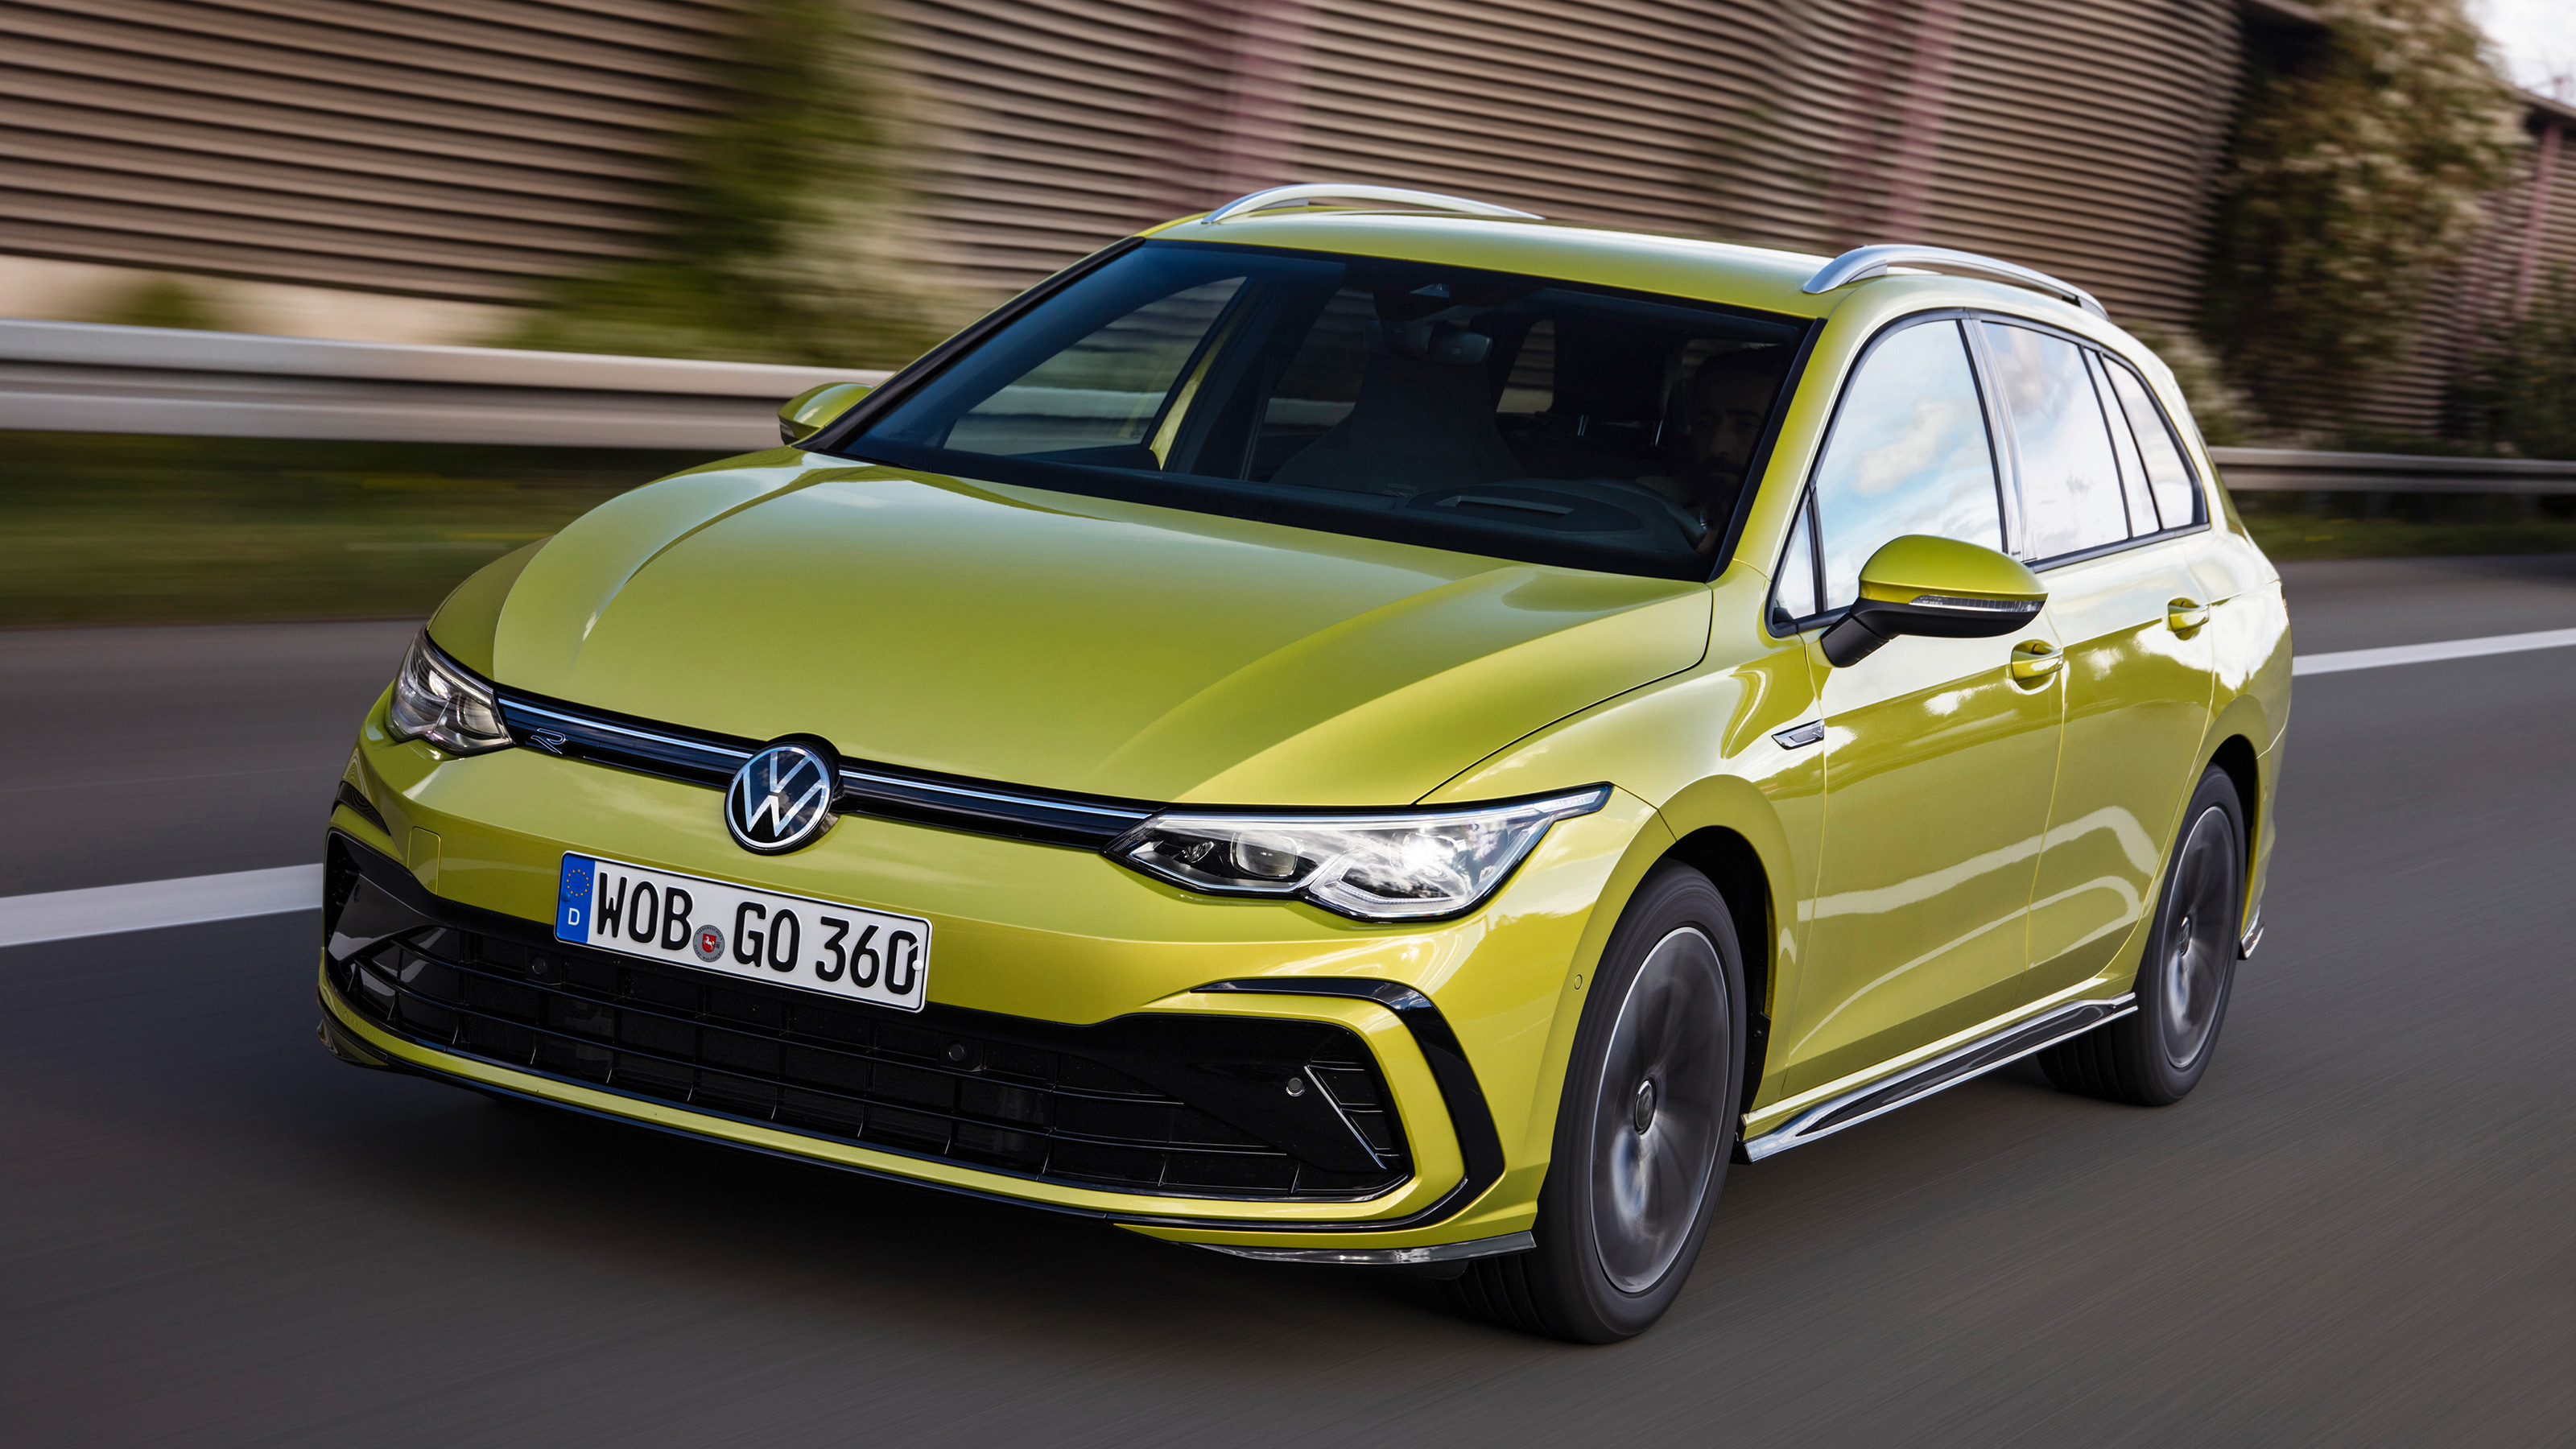 New 2020 Volkswagen Golf Estate on sale in the UK now